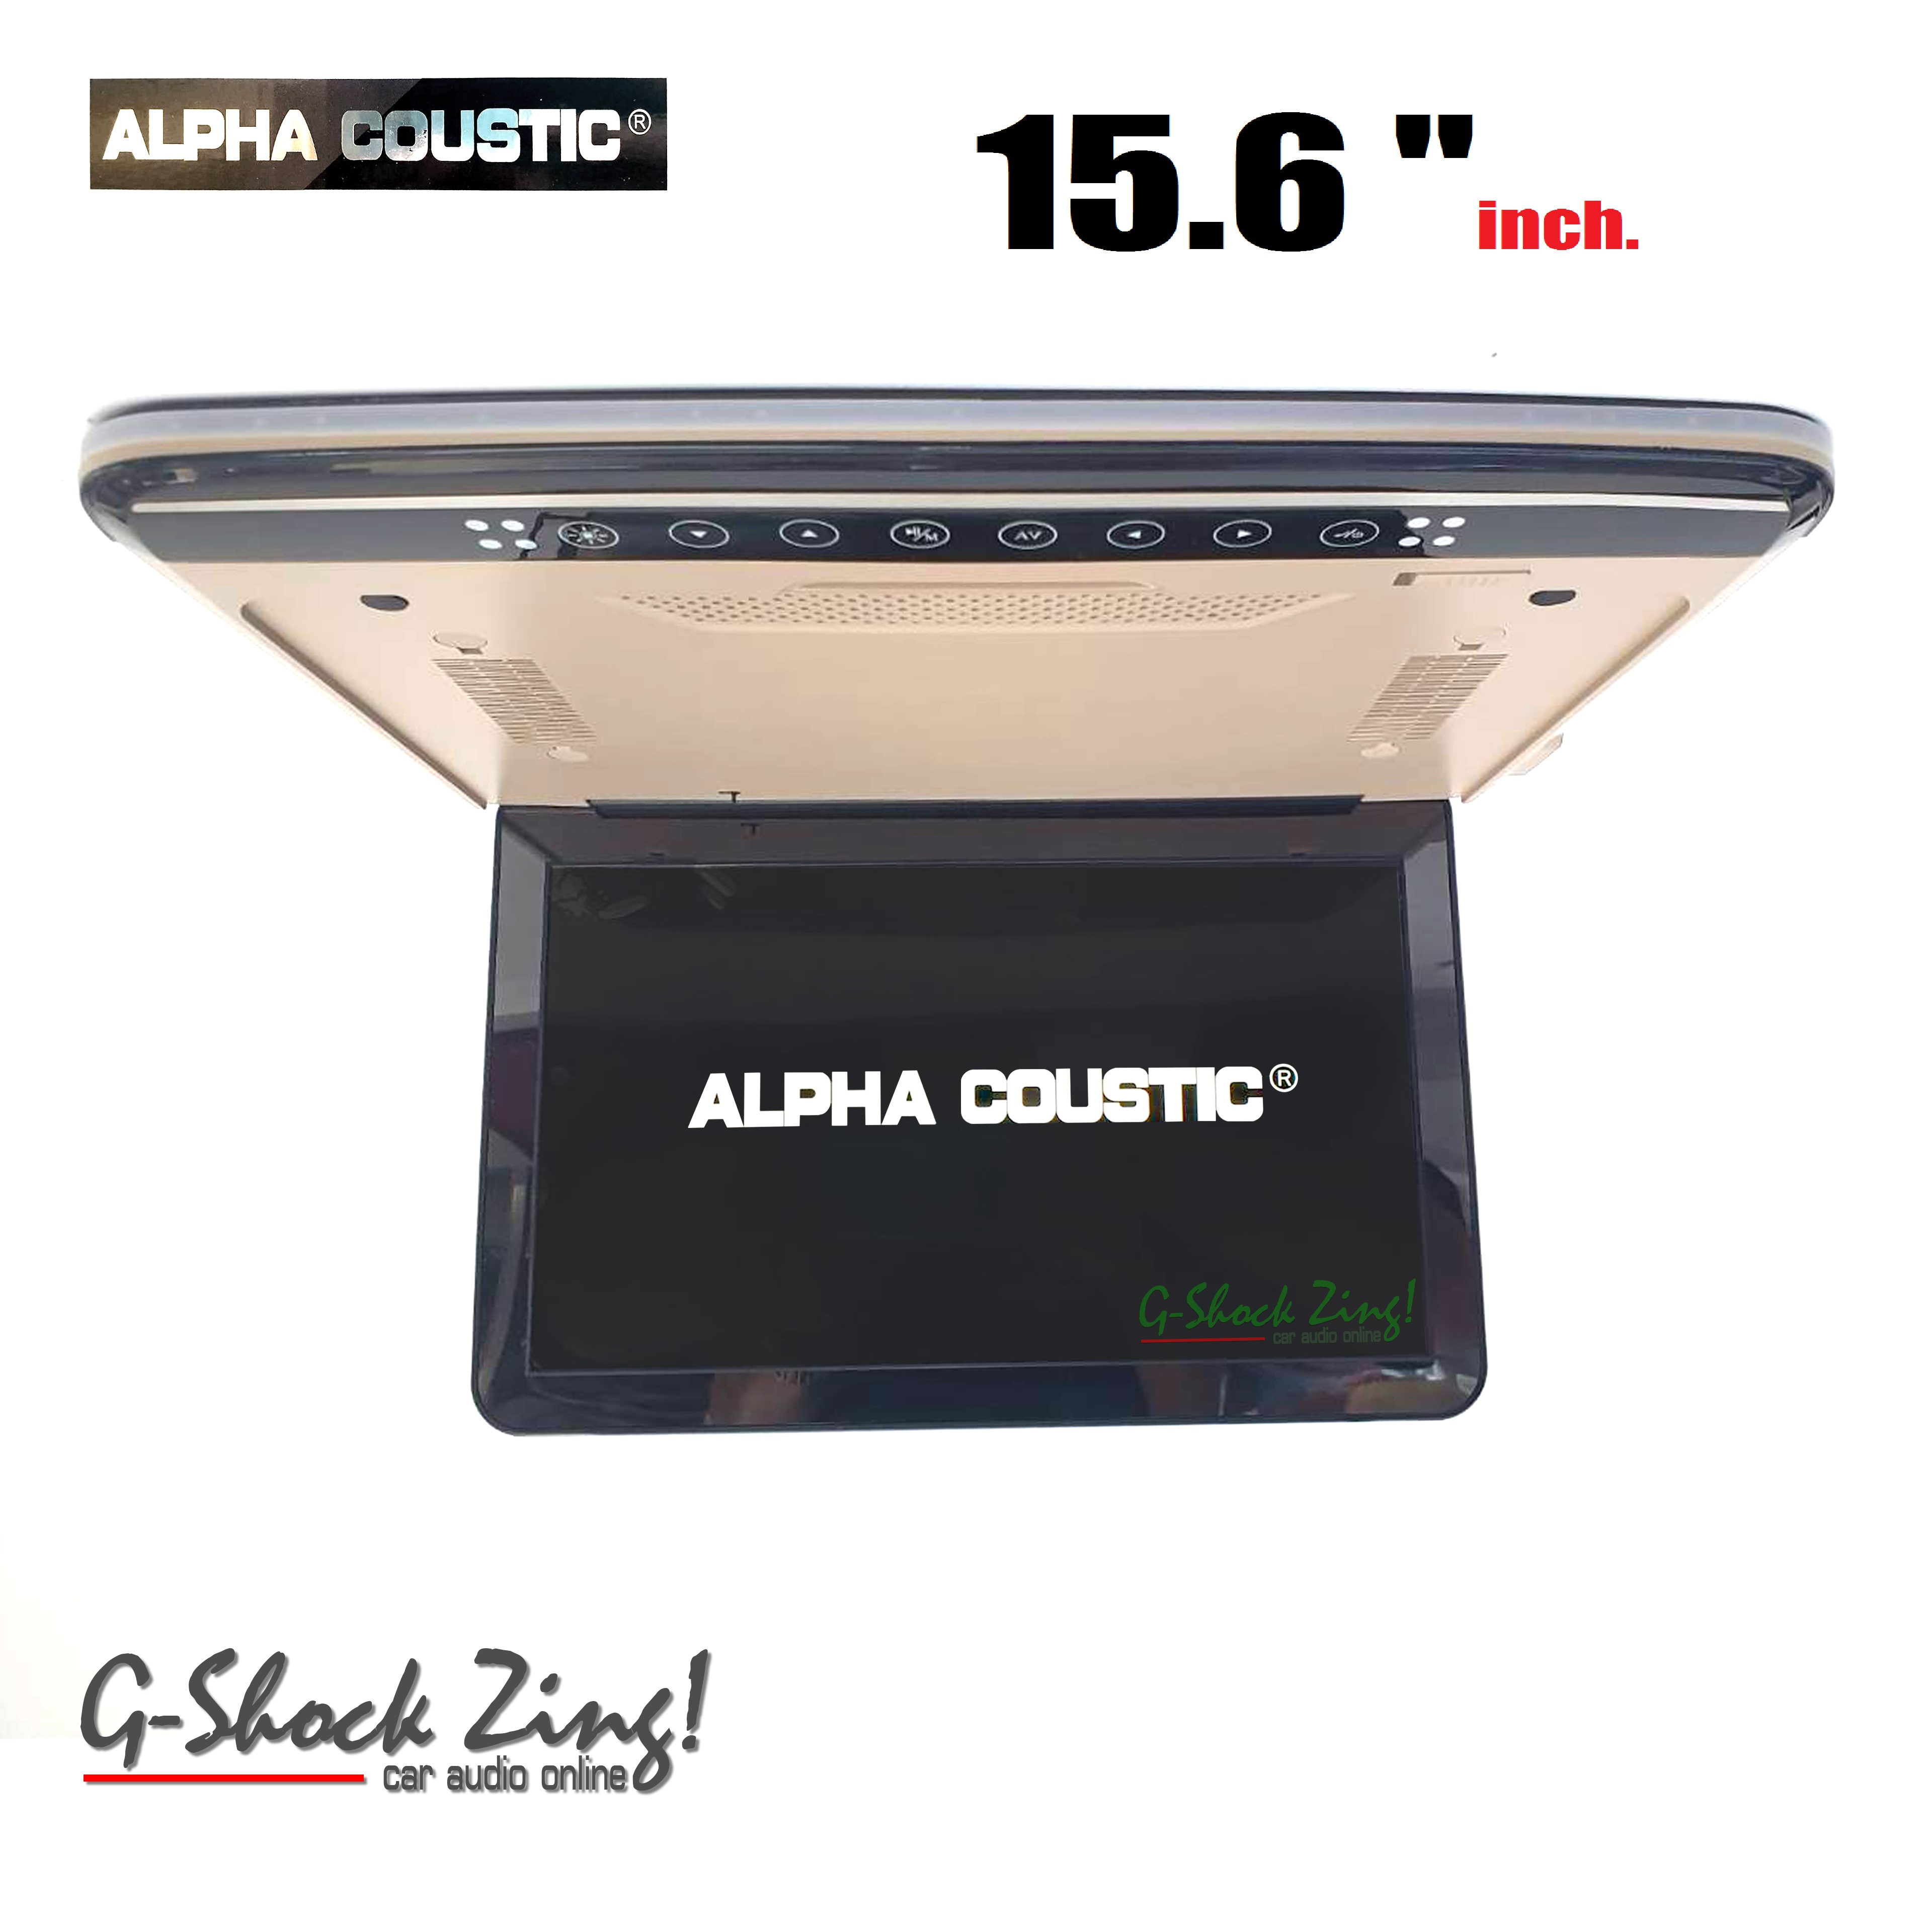 ALPHA COUSTIC Roofmount Monitor เครื่องเสียงรถยนต์/จอเพดานติดรถยนต์ ขนาดจอ 15.6นิ้ว HDMI IN /USB SLOT/SD SLOT (สี Beige)